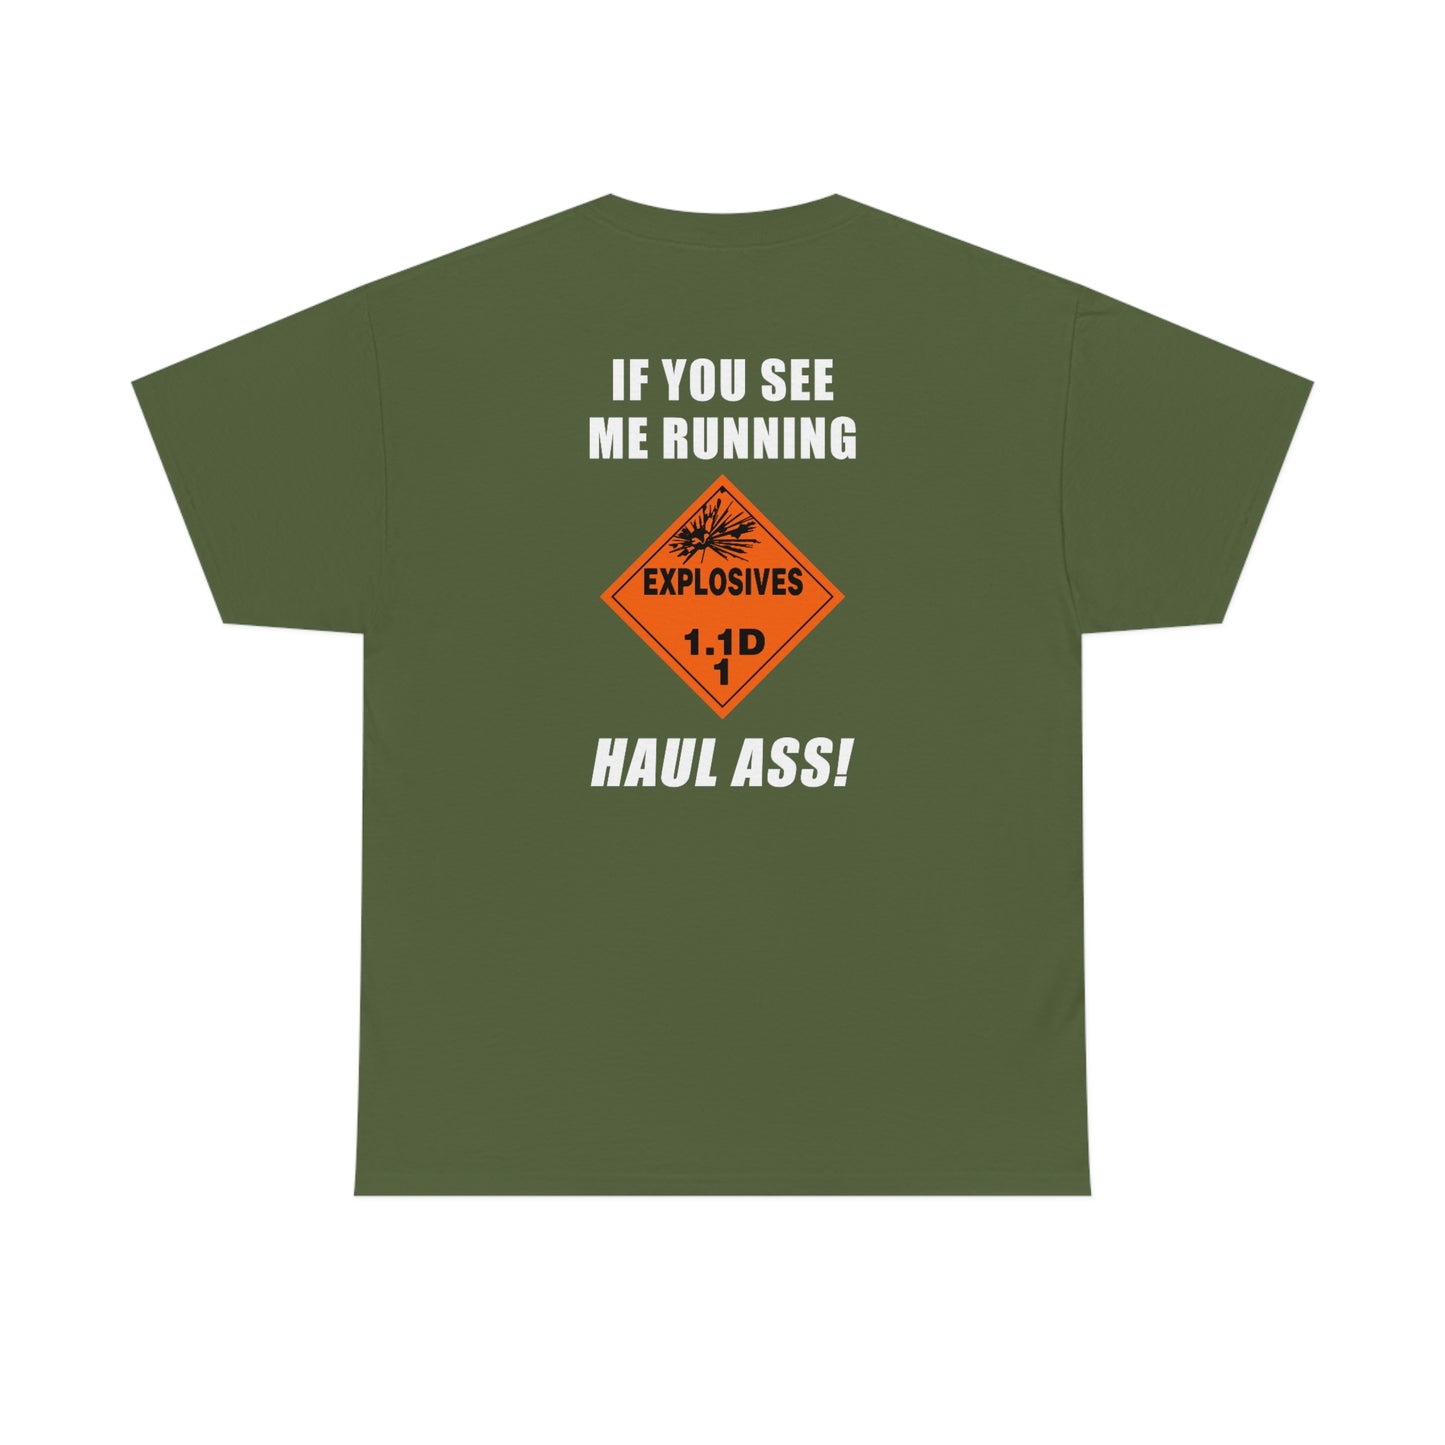 USAF AMMO IYAAYAS Explosive Placard 1.1D If You See Me Running Haul Ass Men's Gift T-Shirt